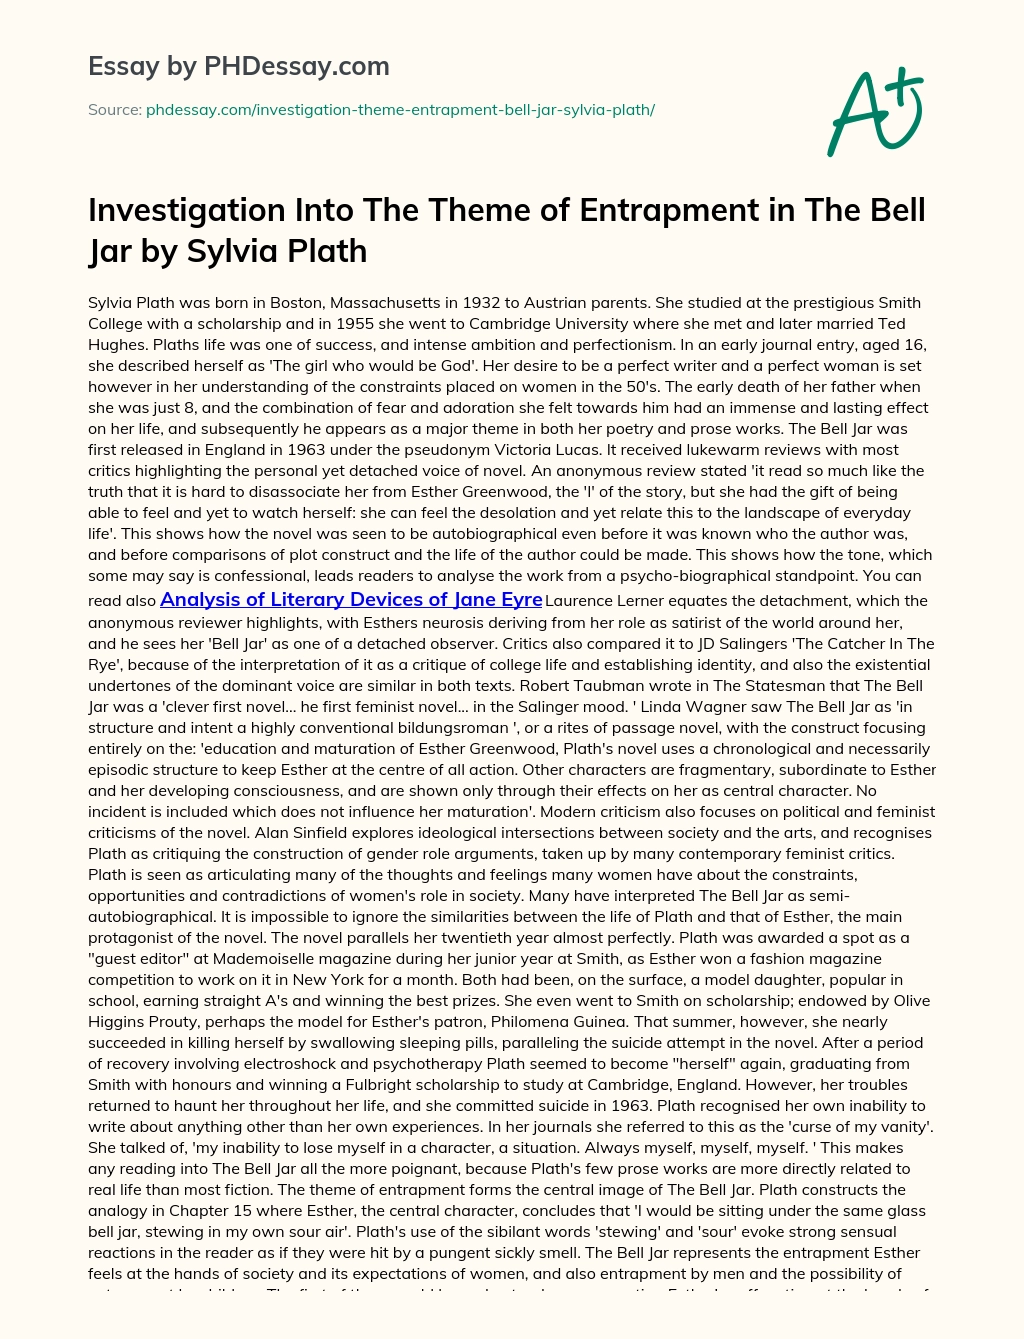 the bell jar essay